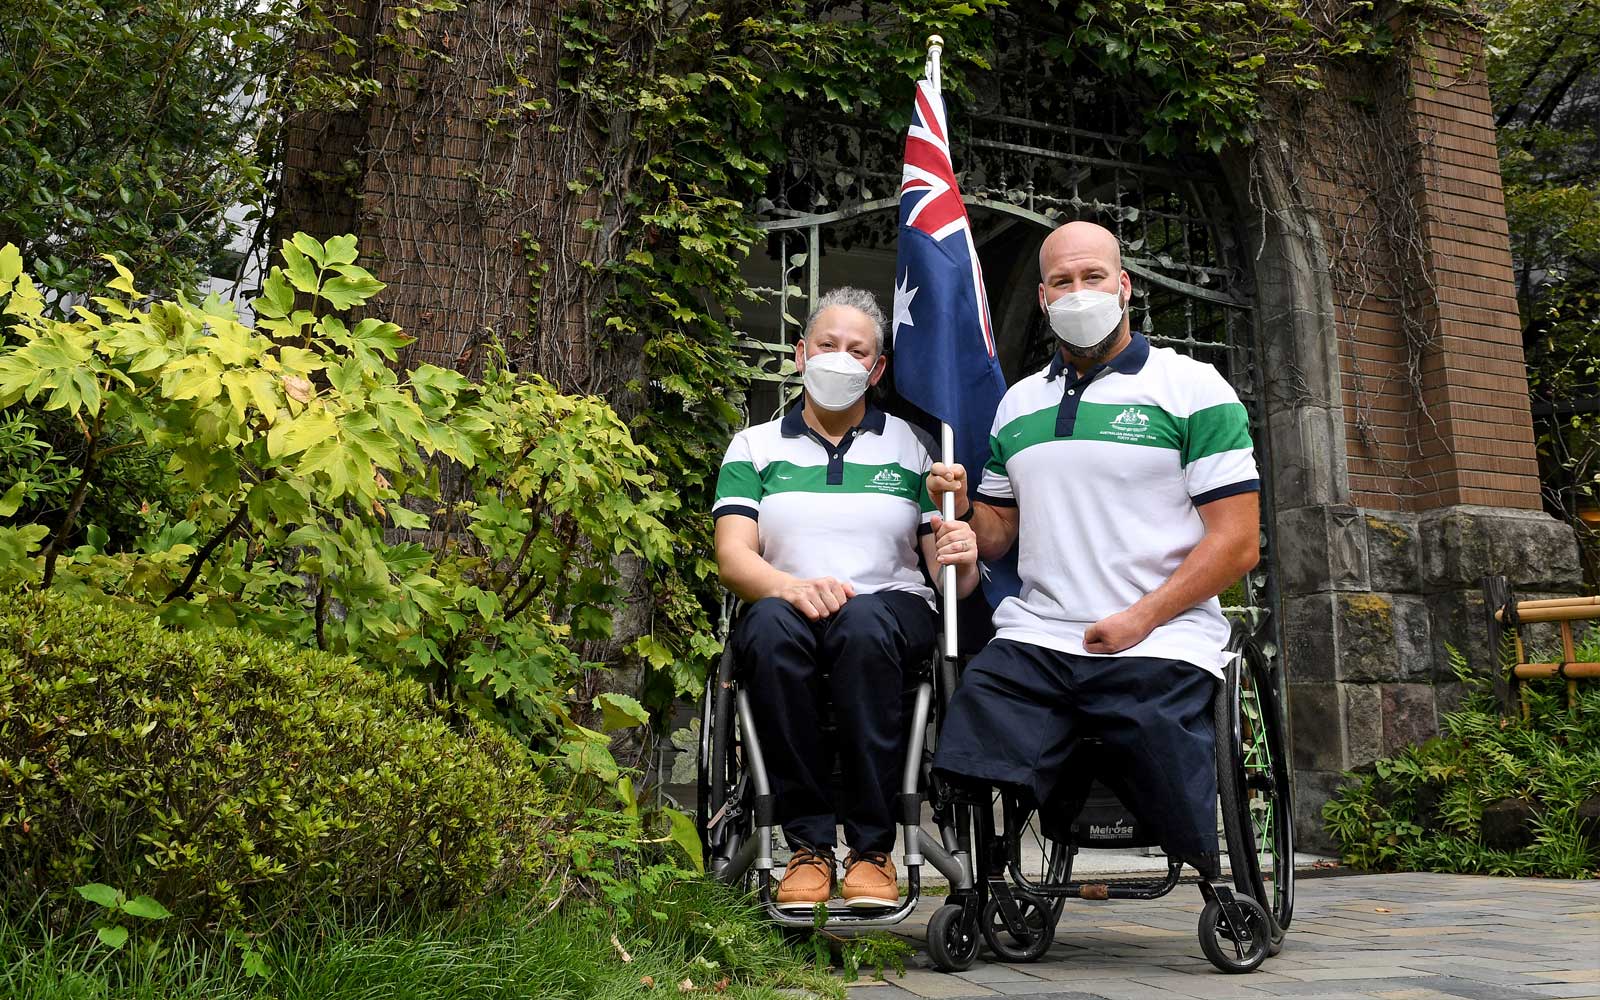 Two Of Australia’s Greatest Paralympians Bestowed Flagbearer Honour